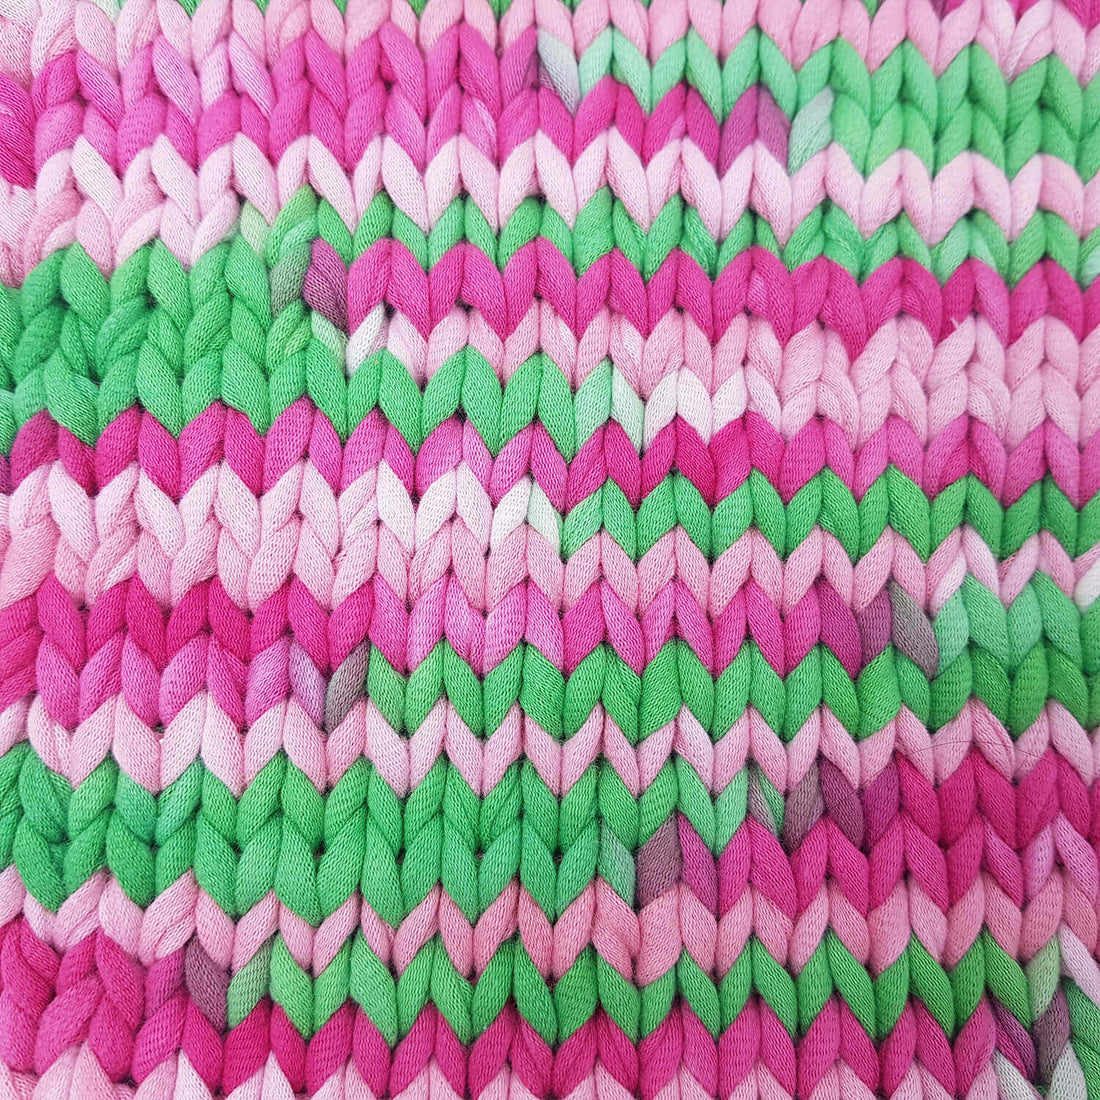 Kotton T-Shirt Yarn - Multi Color M10